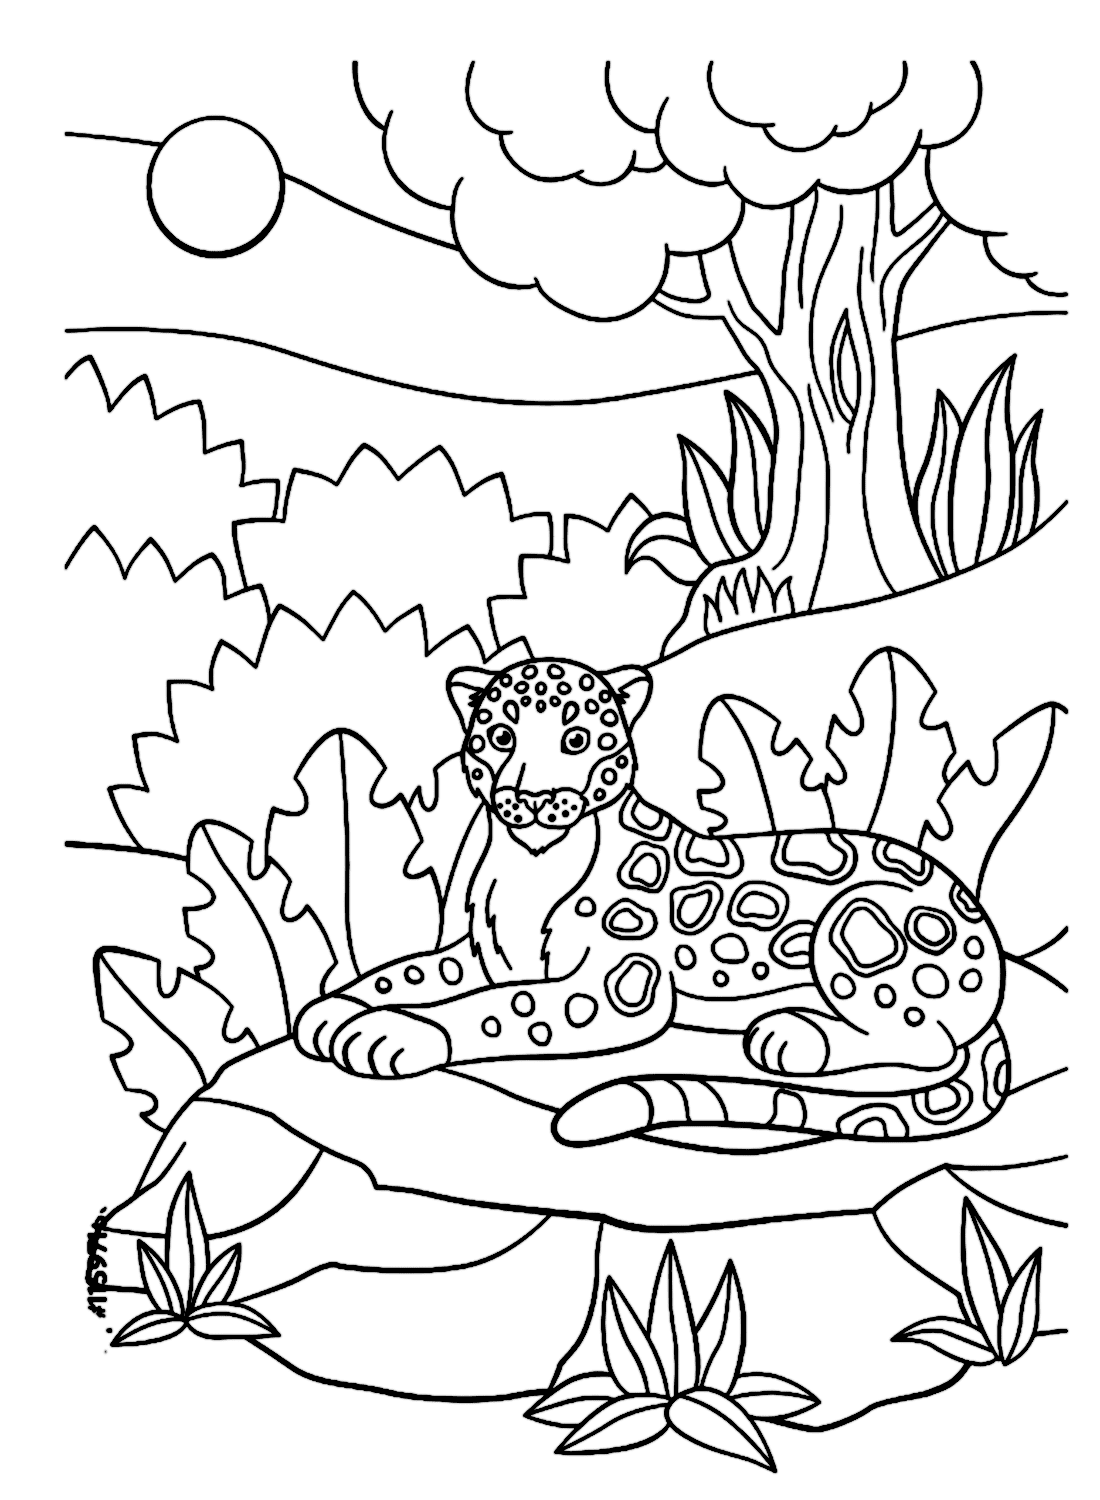 Giaguaro che riposa nella giungla from Giaguaro